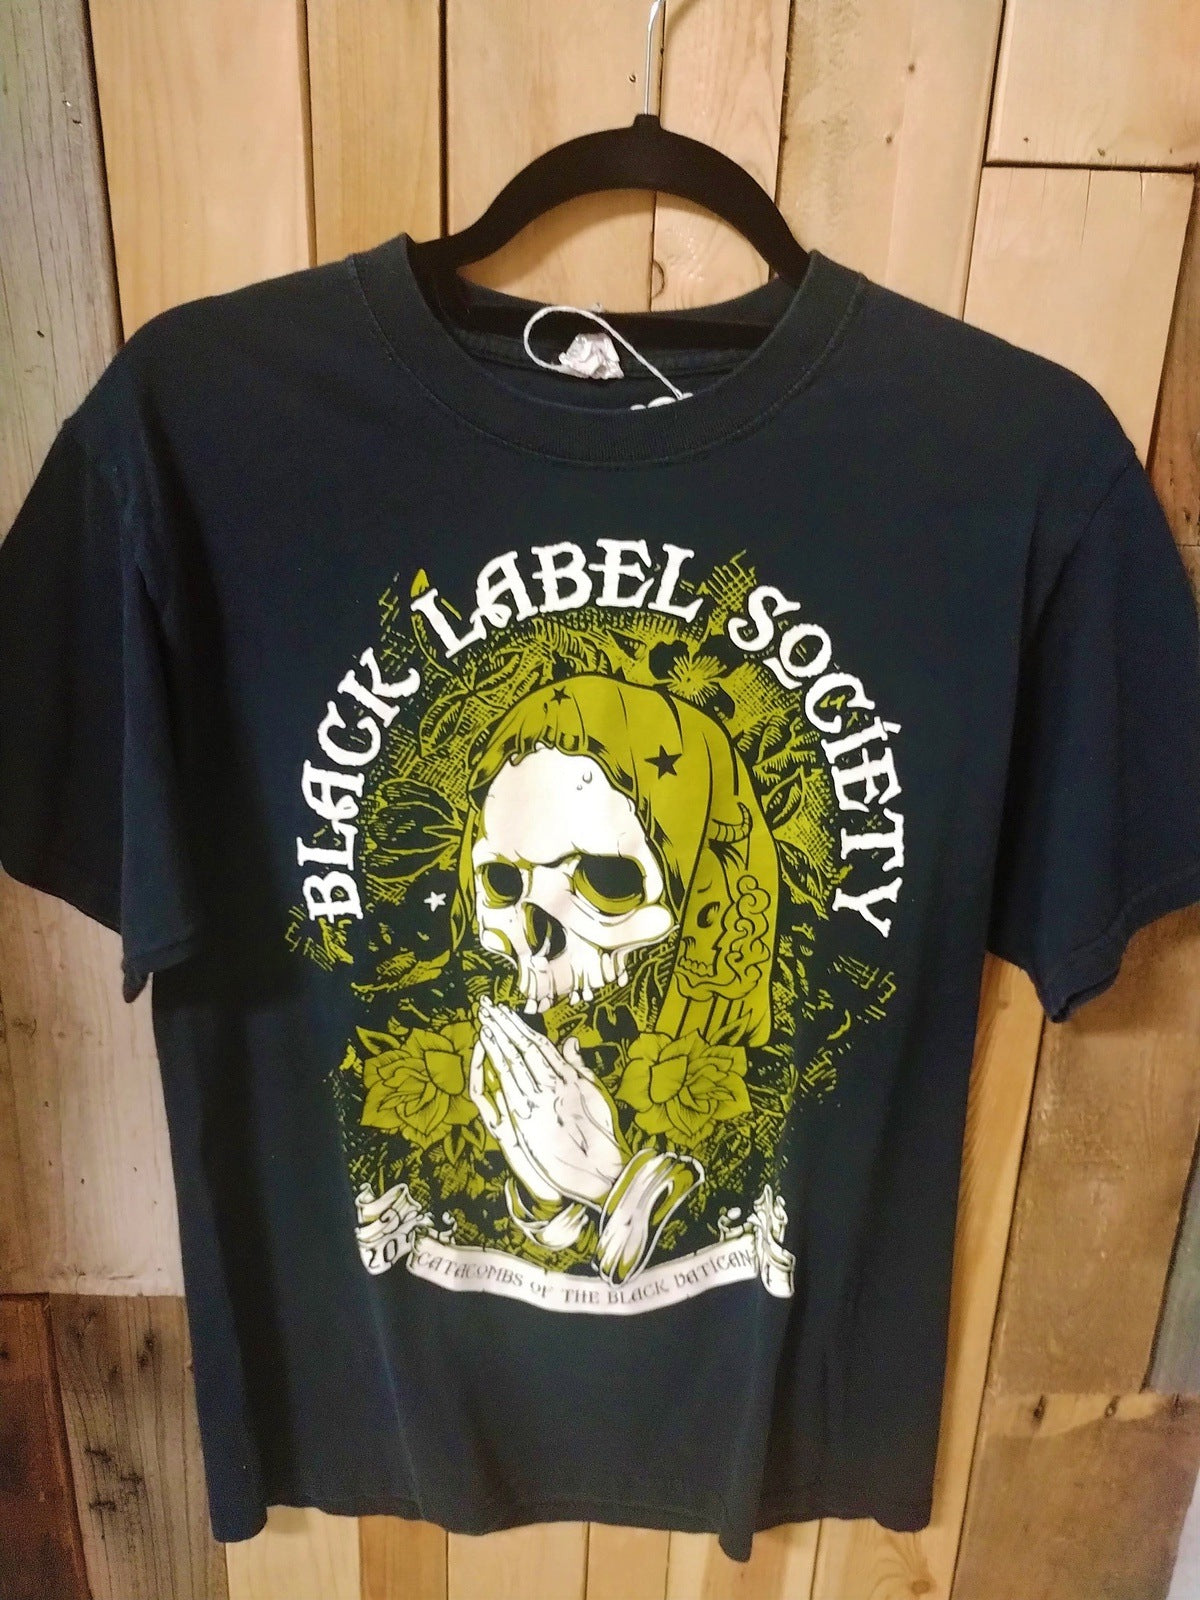 Black Label Society 2014 Tour Tee Shirt Size Medium